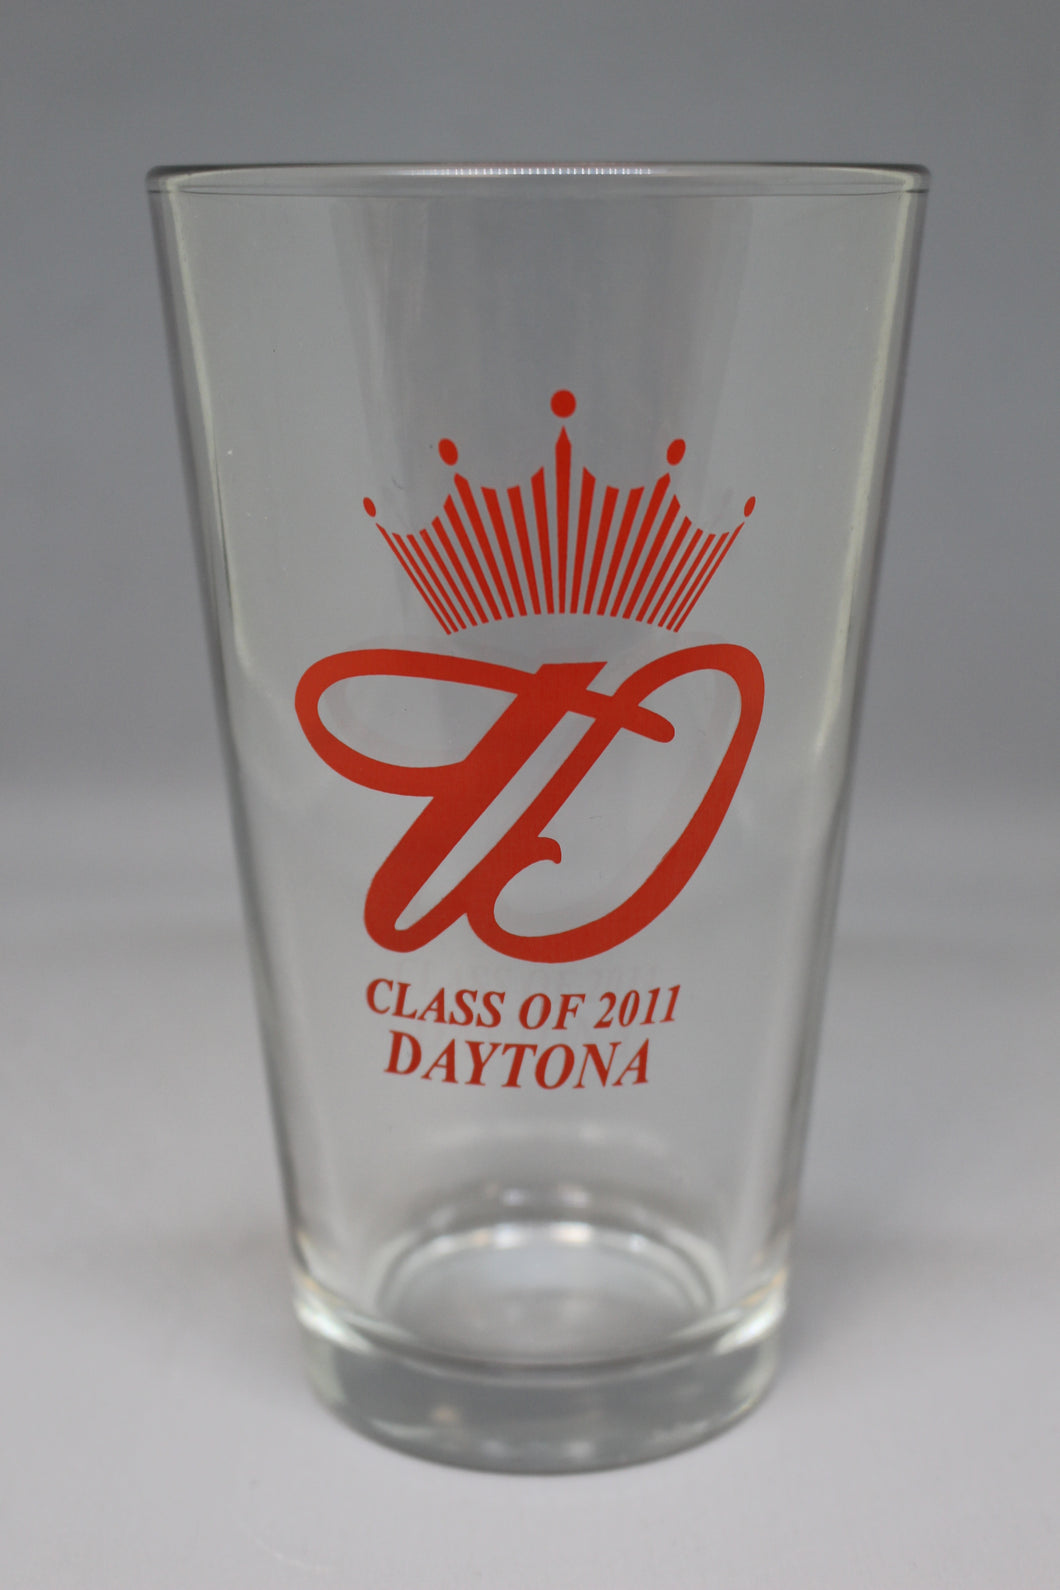 Class Of 2011 Daytona Drinking Glass -Used